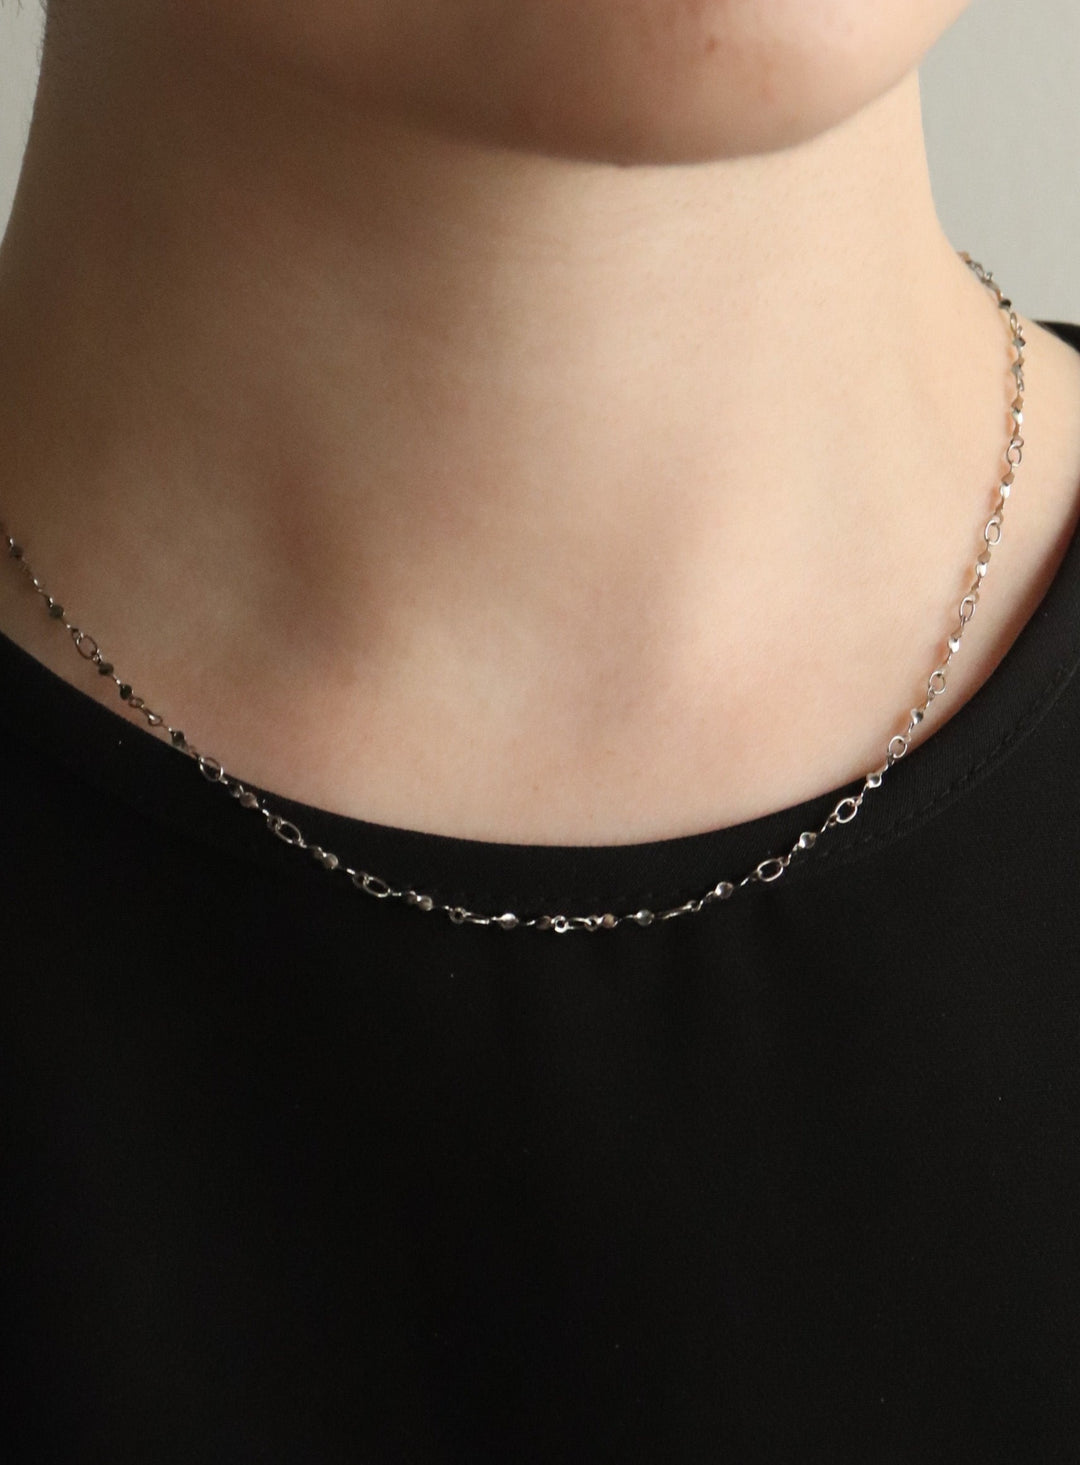 etoile chain necklace